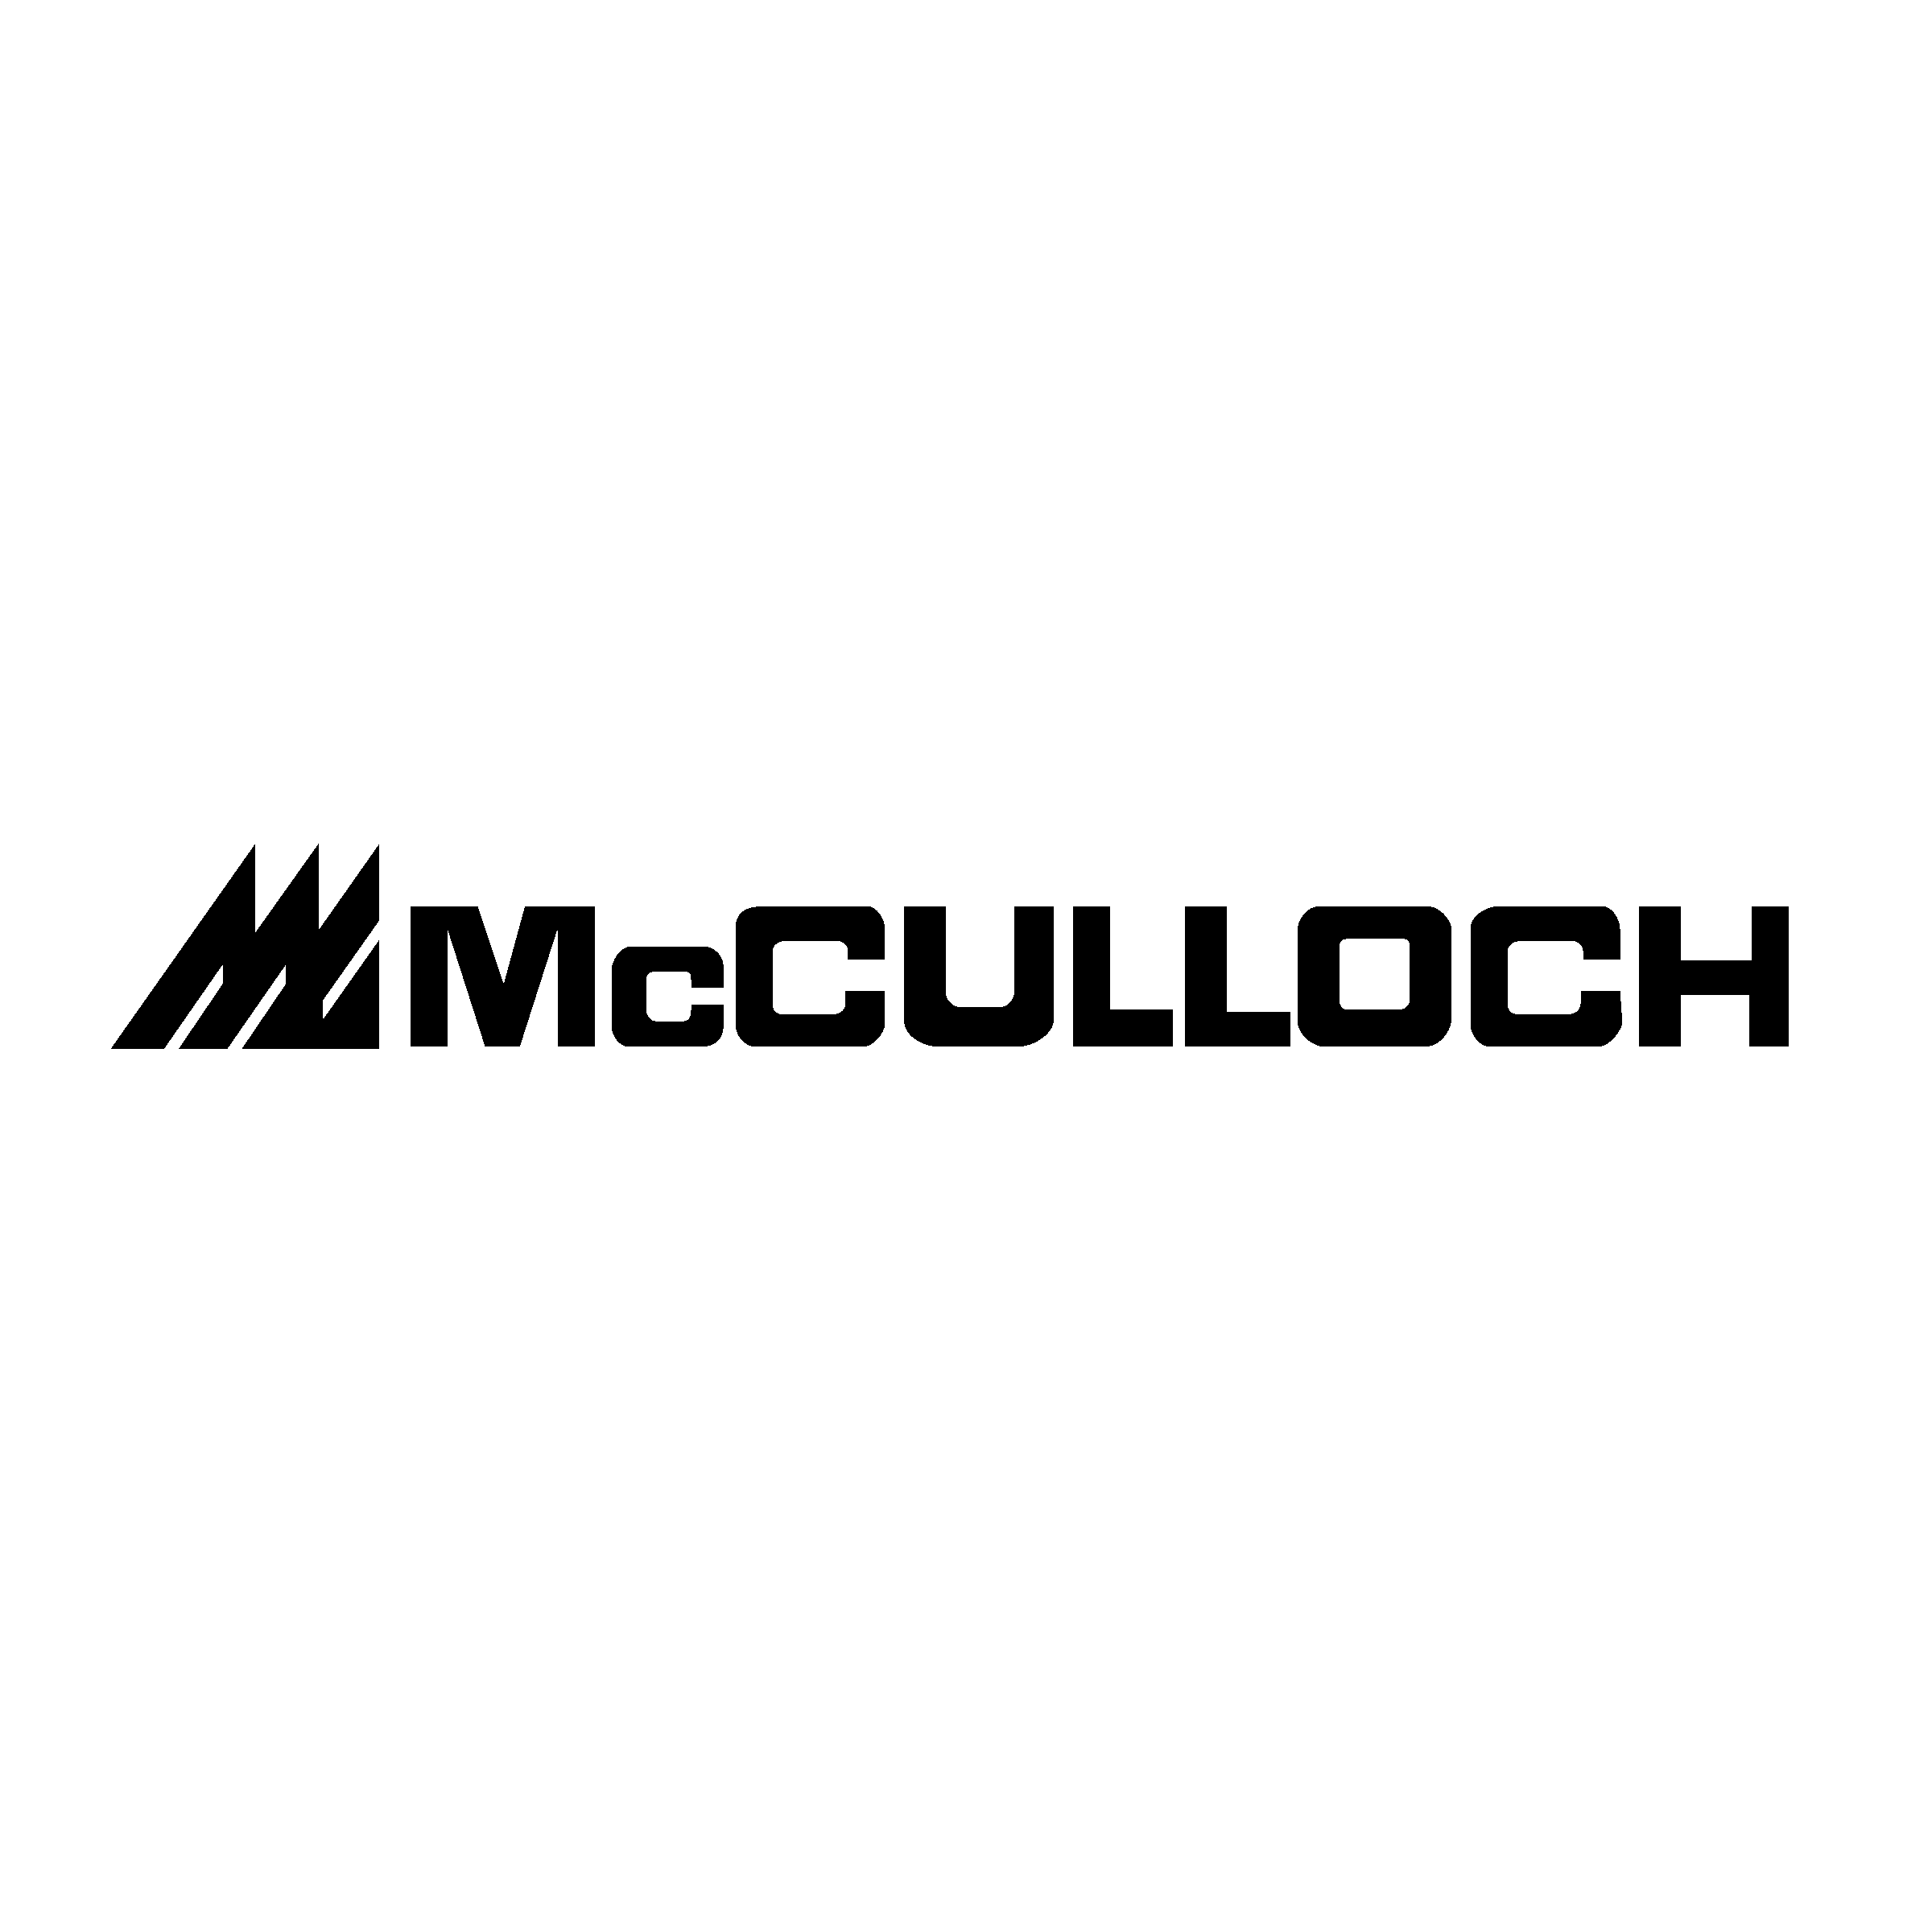 McCulloch Logo - McCulloch Logo PNG Transparent & SVG Vector